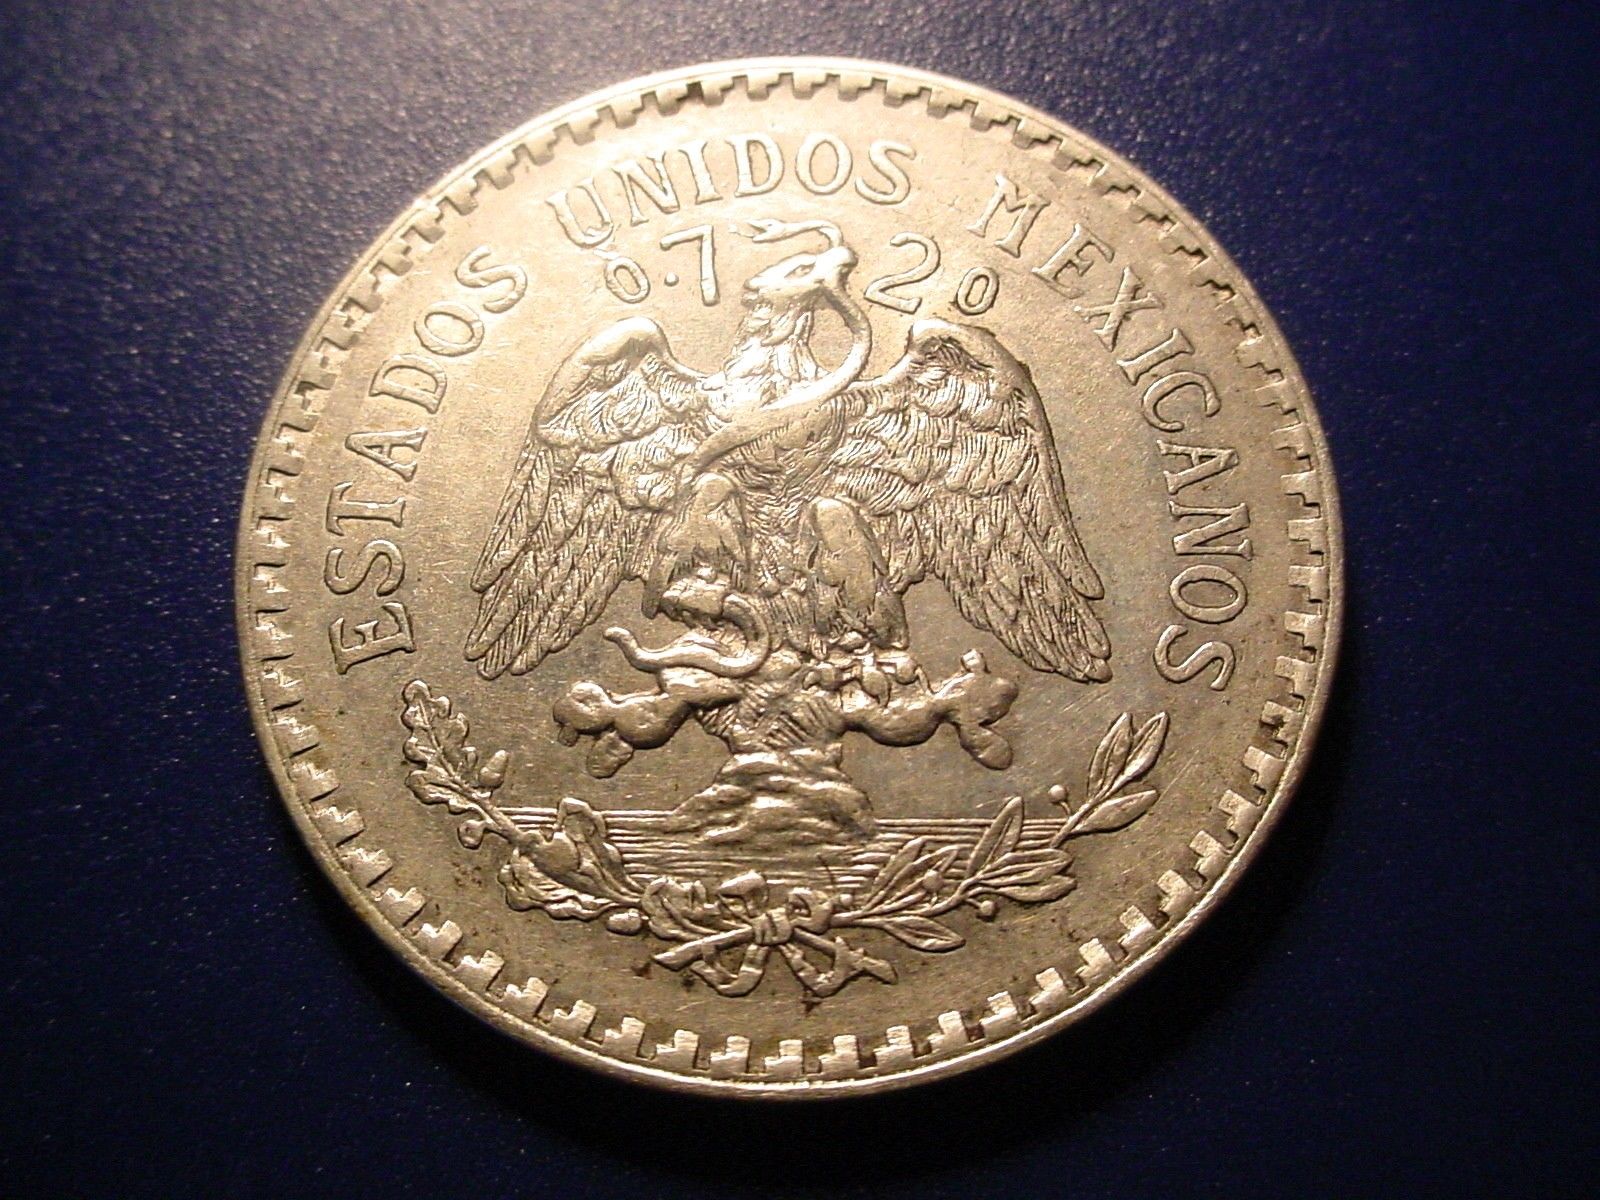 GTG 1920 Silver Peso | Coin Talk